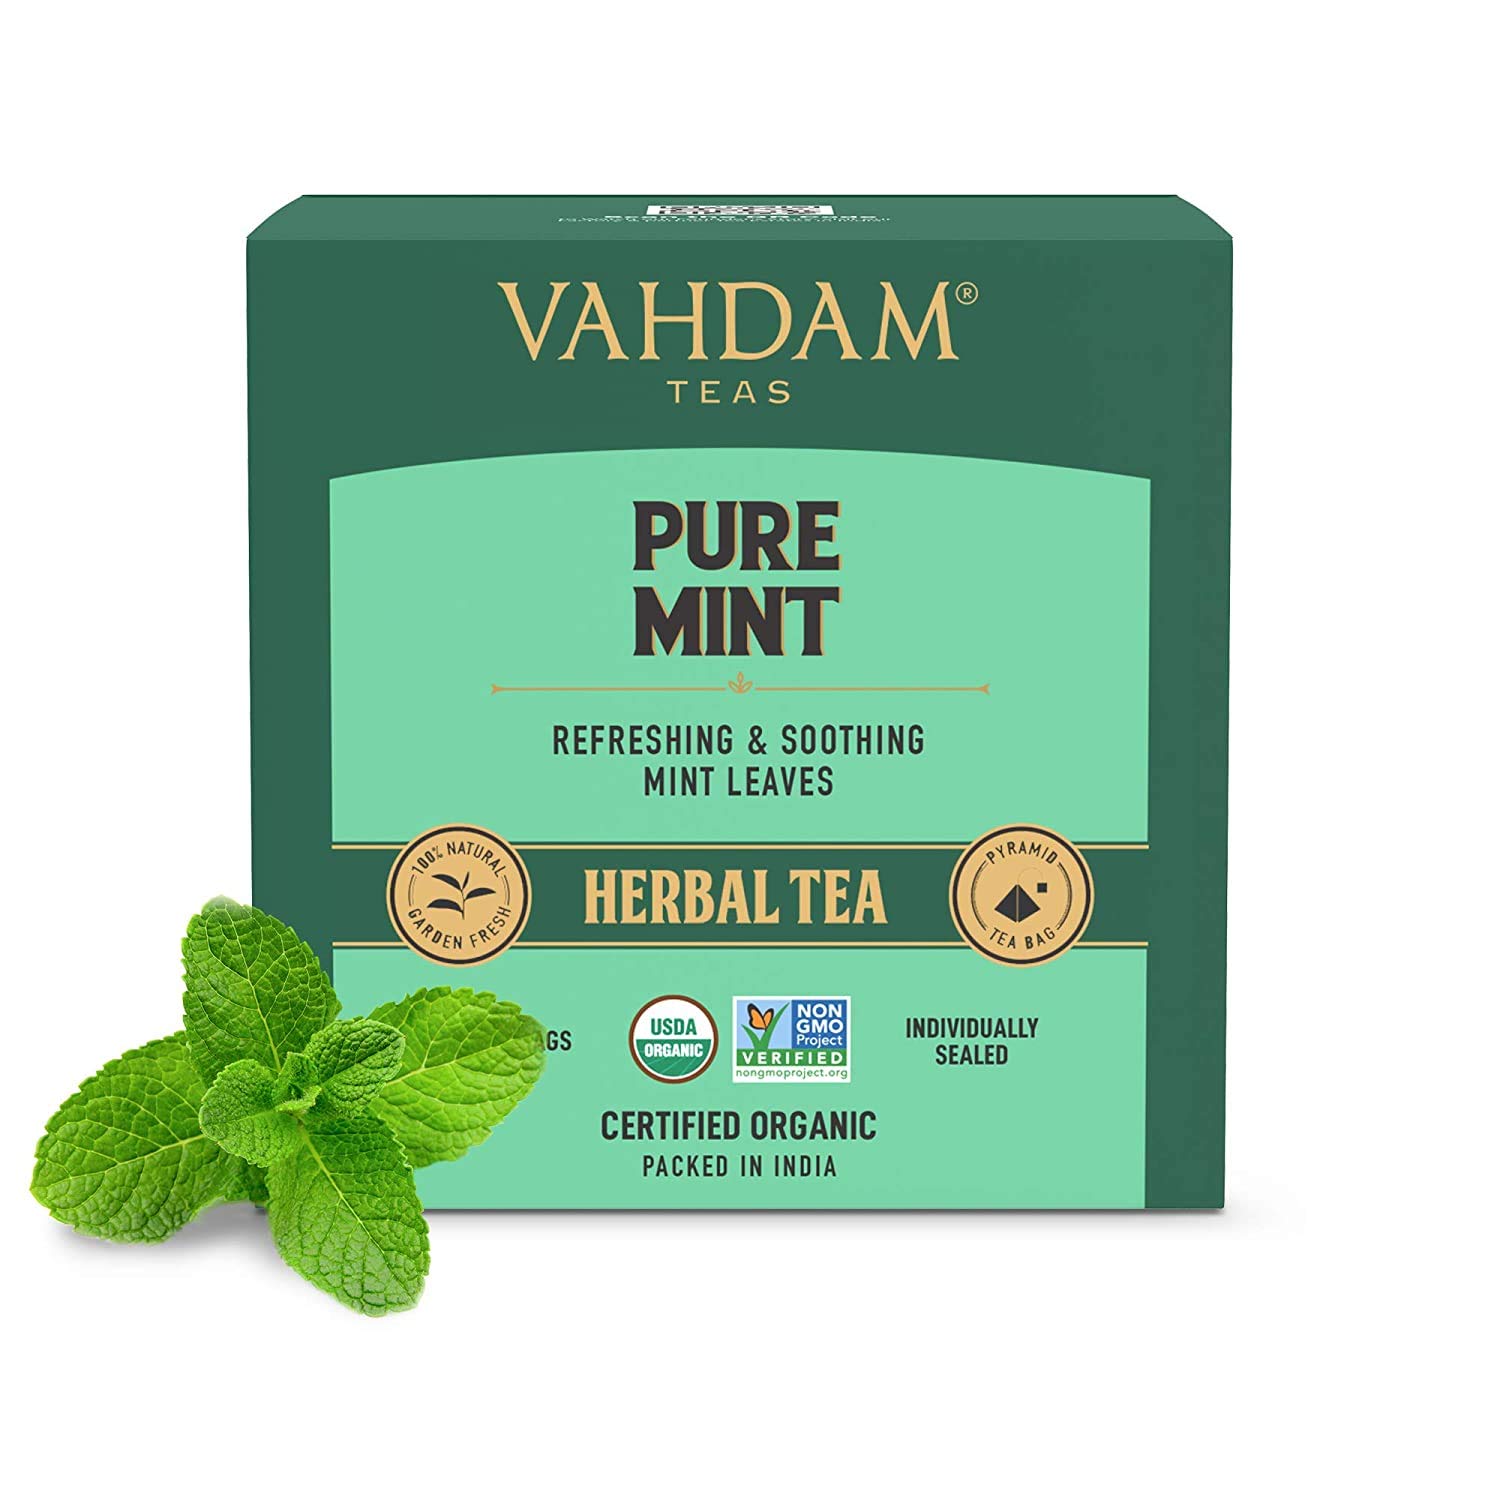 Vahdam Organic Pure Mint Herbal Tea Bags Image